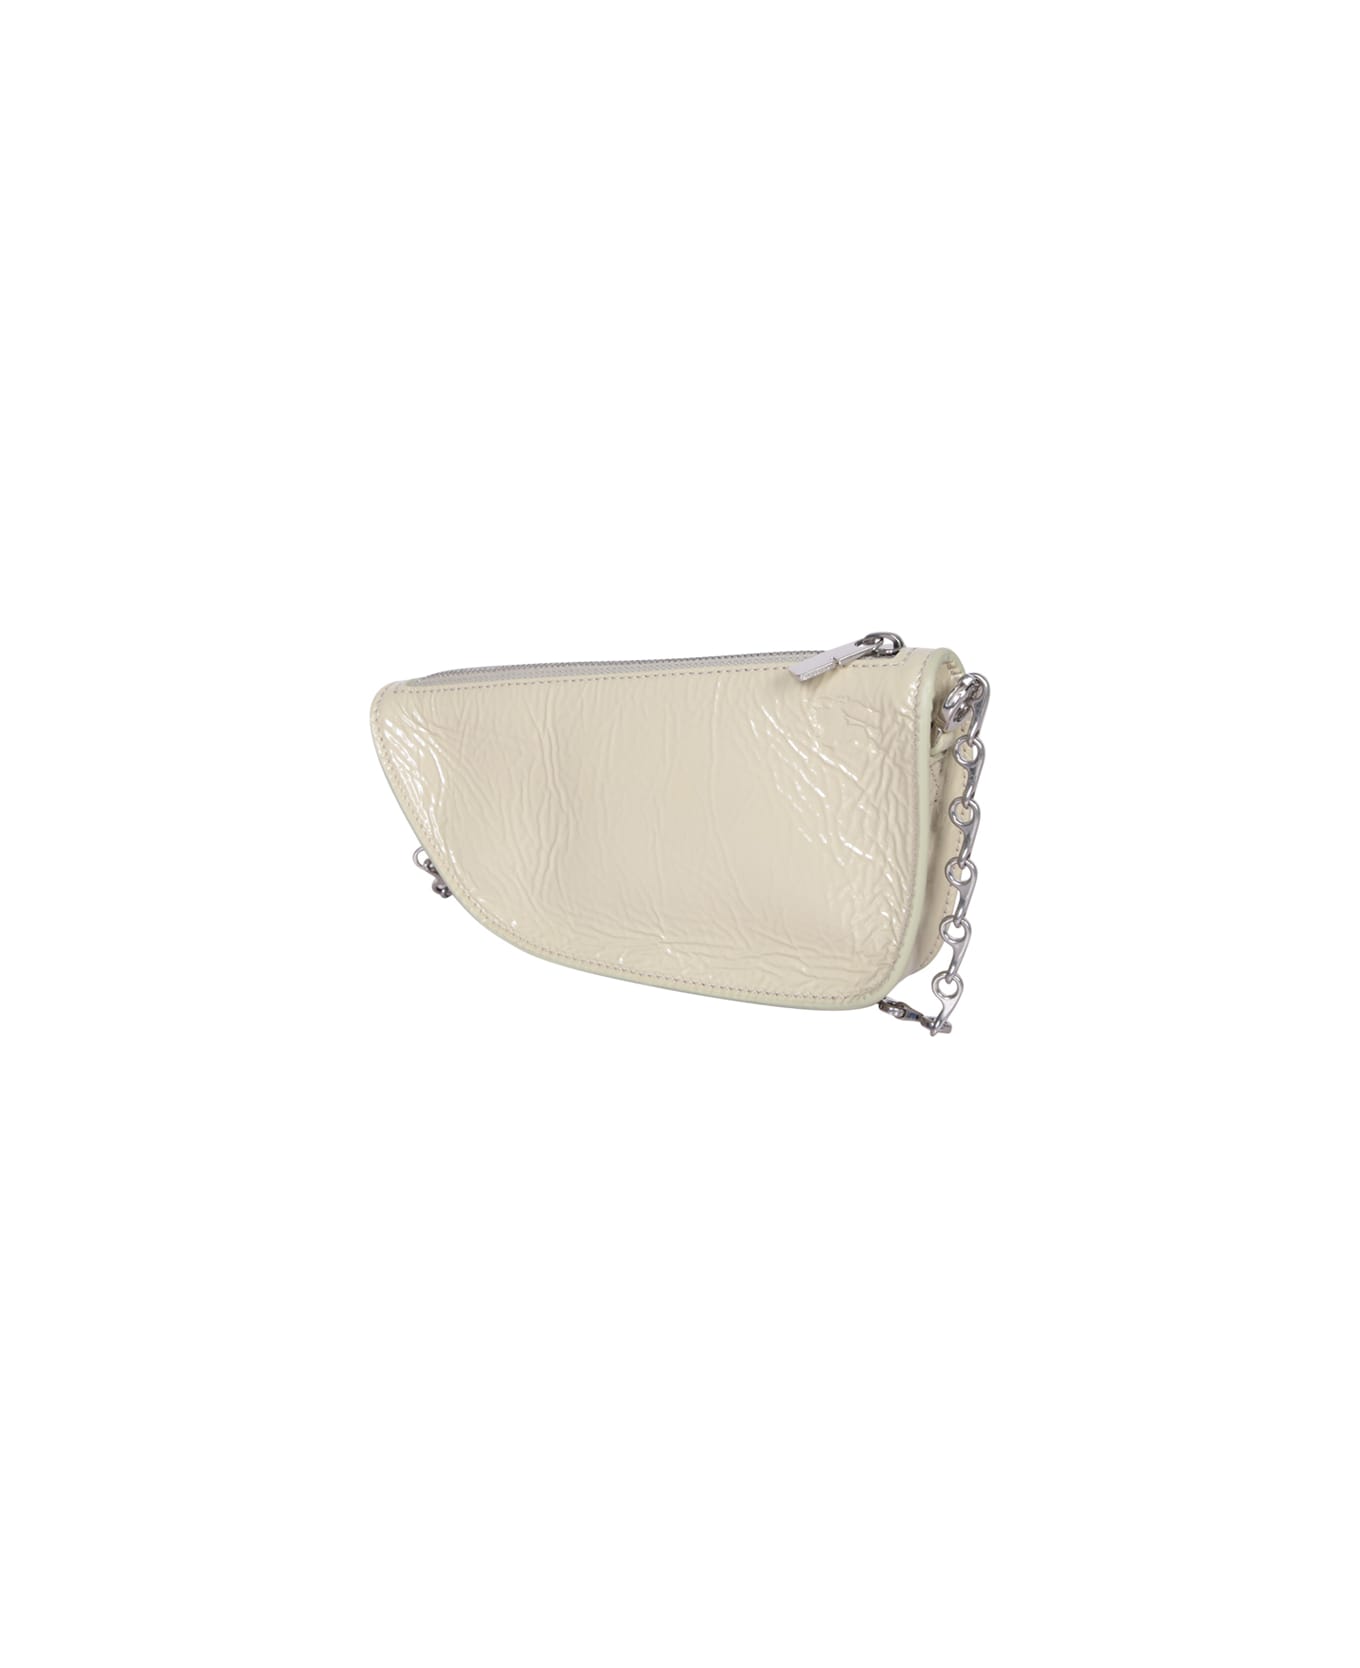 Burberry Wmls Micro Sling Shield Crossbody Bag - Beige トートバッグ